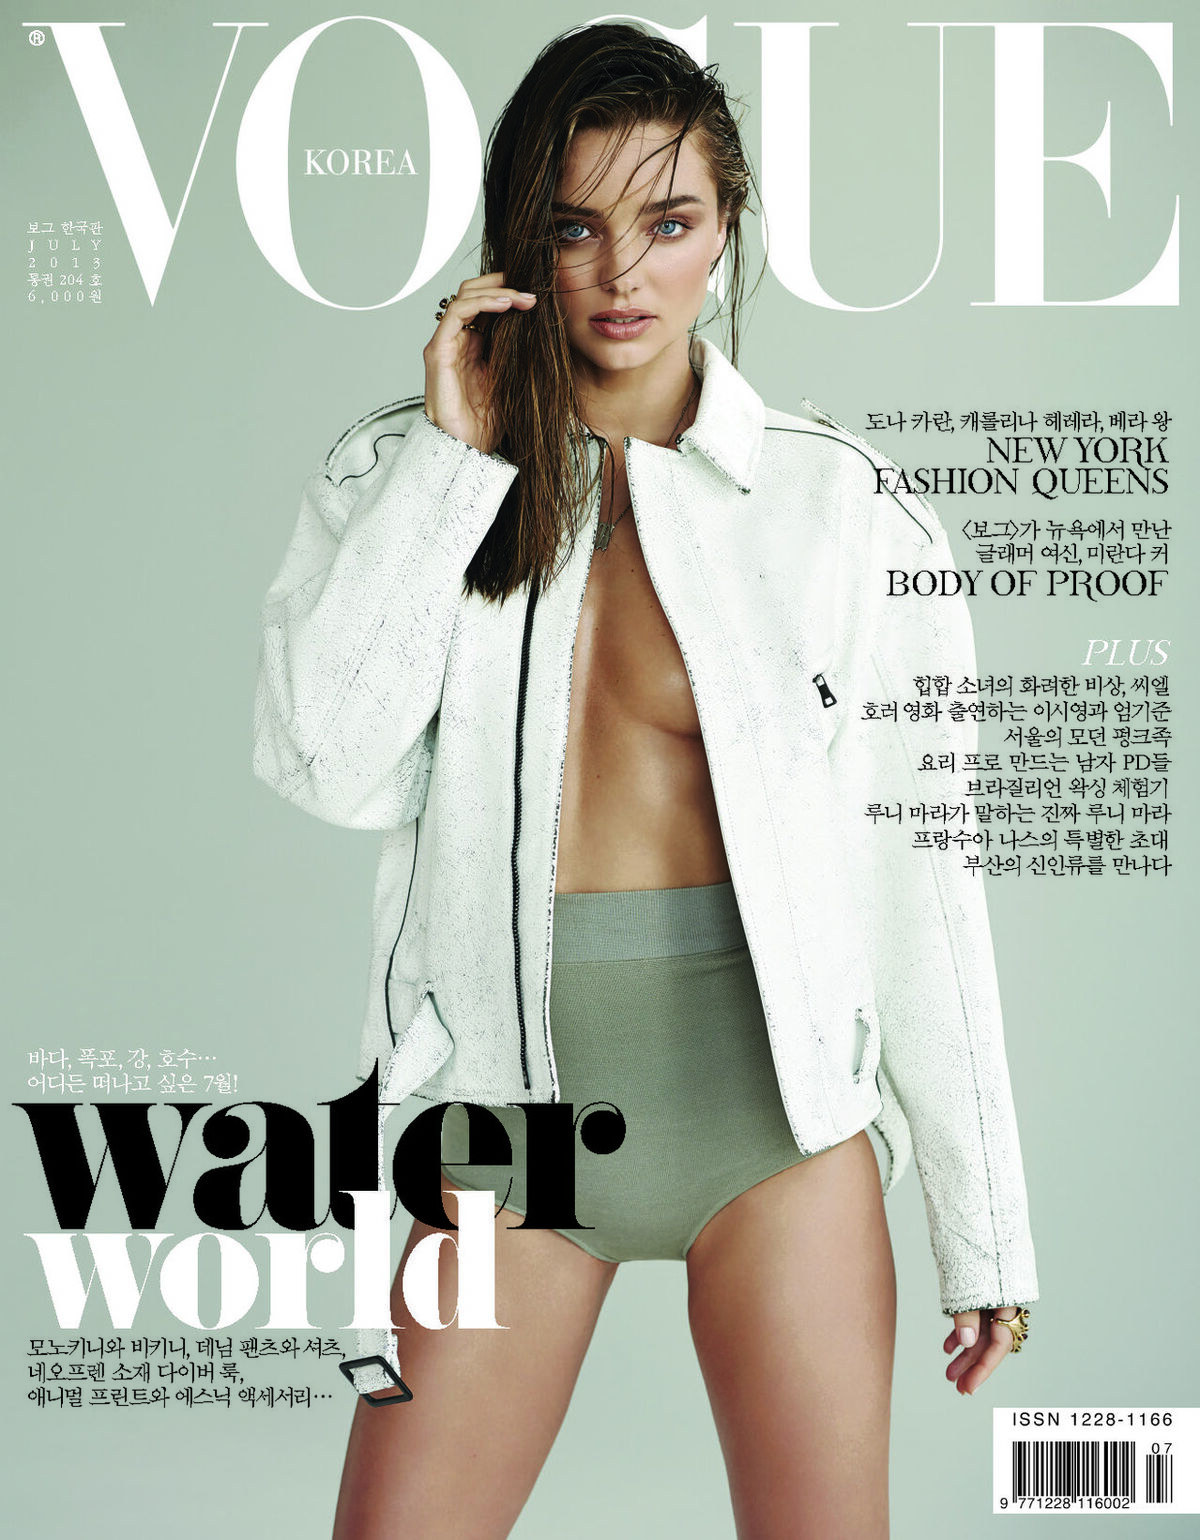 Миранда Керр в журнале Vogue. Корея. Июль 2013